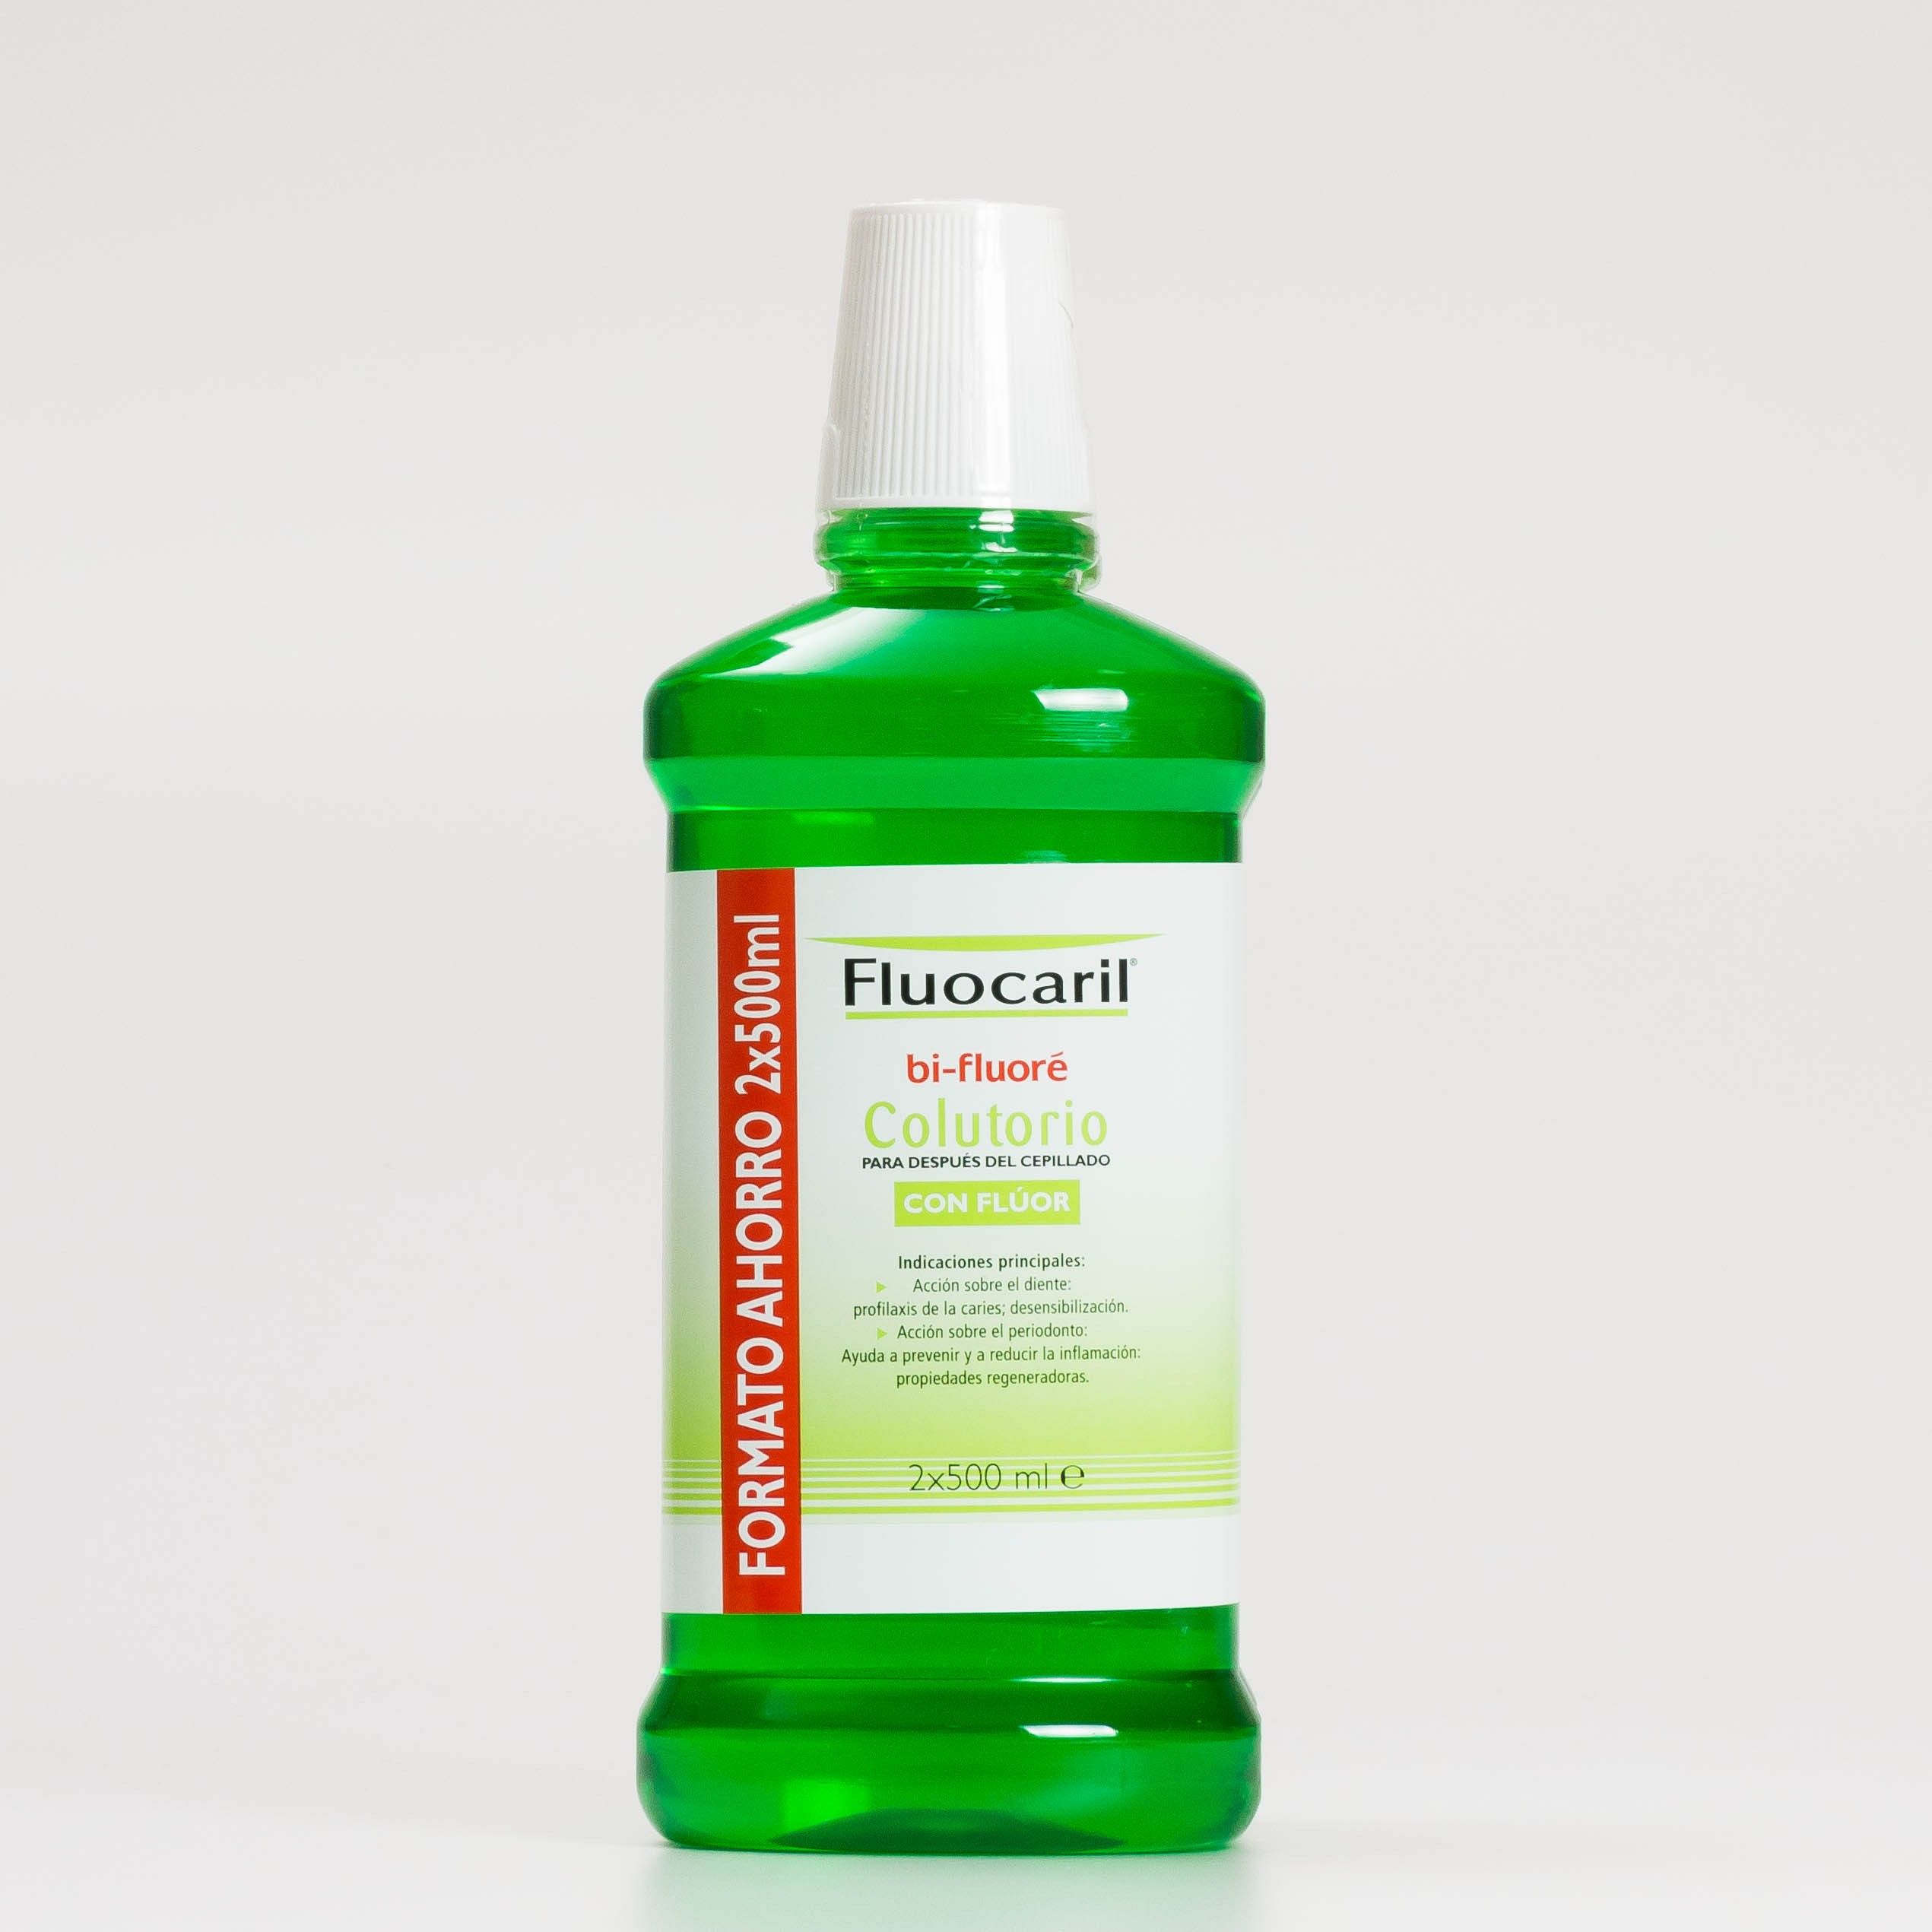 Fluocaril Bi-fluore oferta colutorio